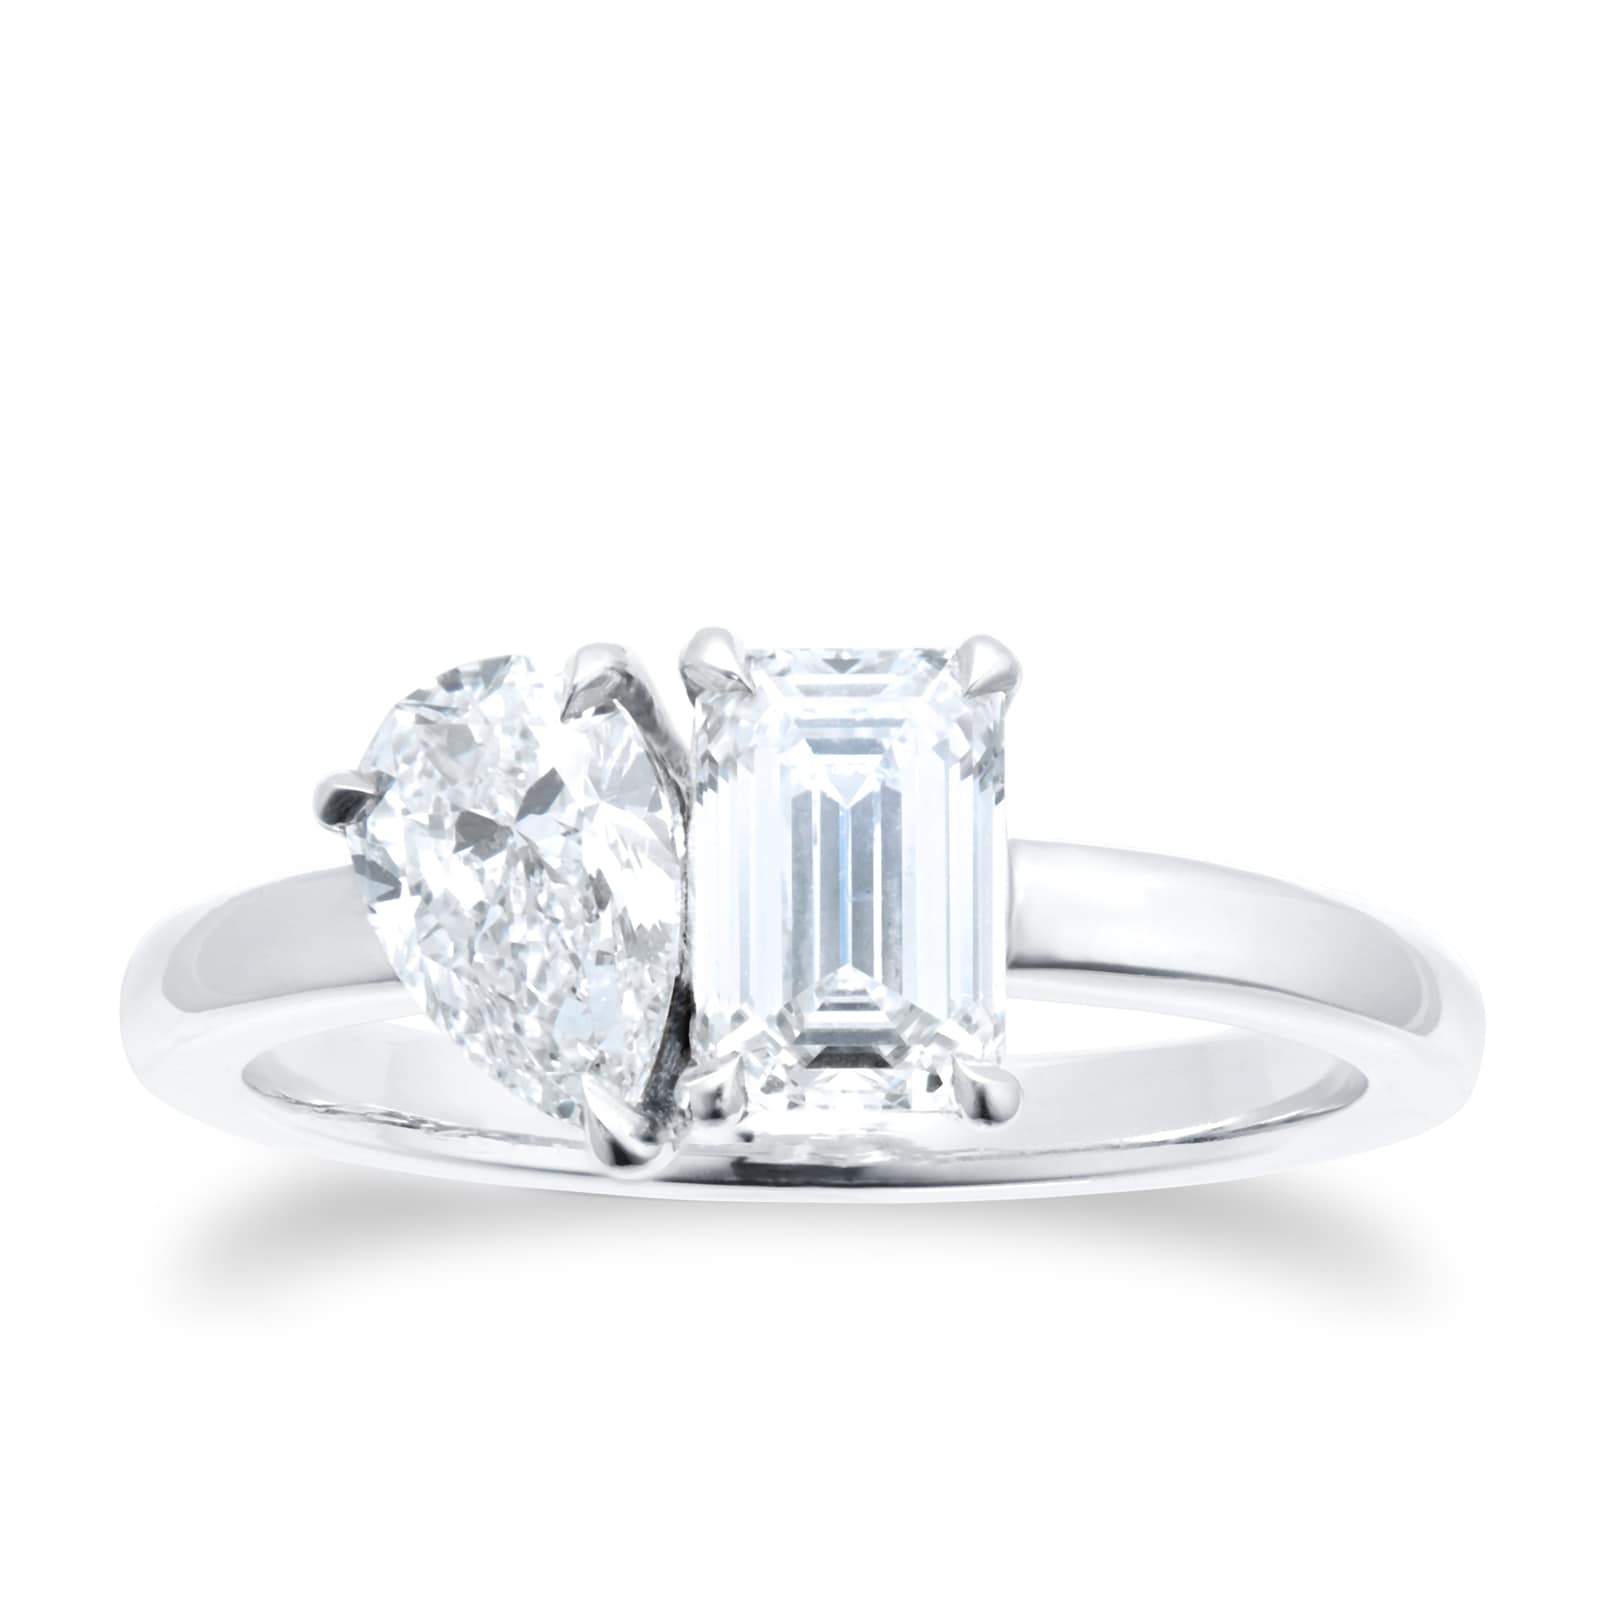 Platinum Tois Et Moi 1.60cttw Pear & Emerald Cut Diamond Ring - Ring Size M